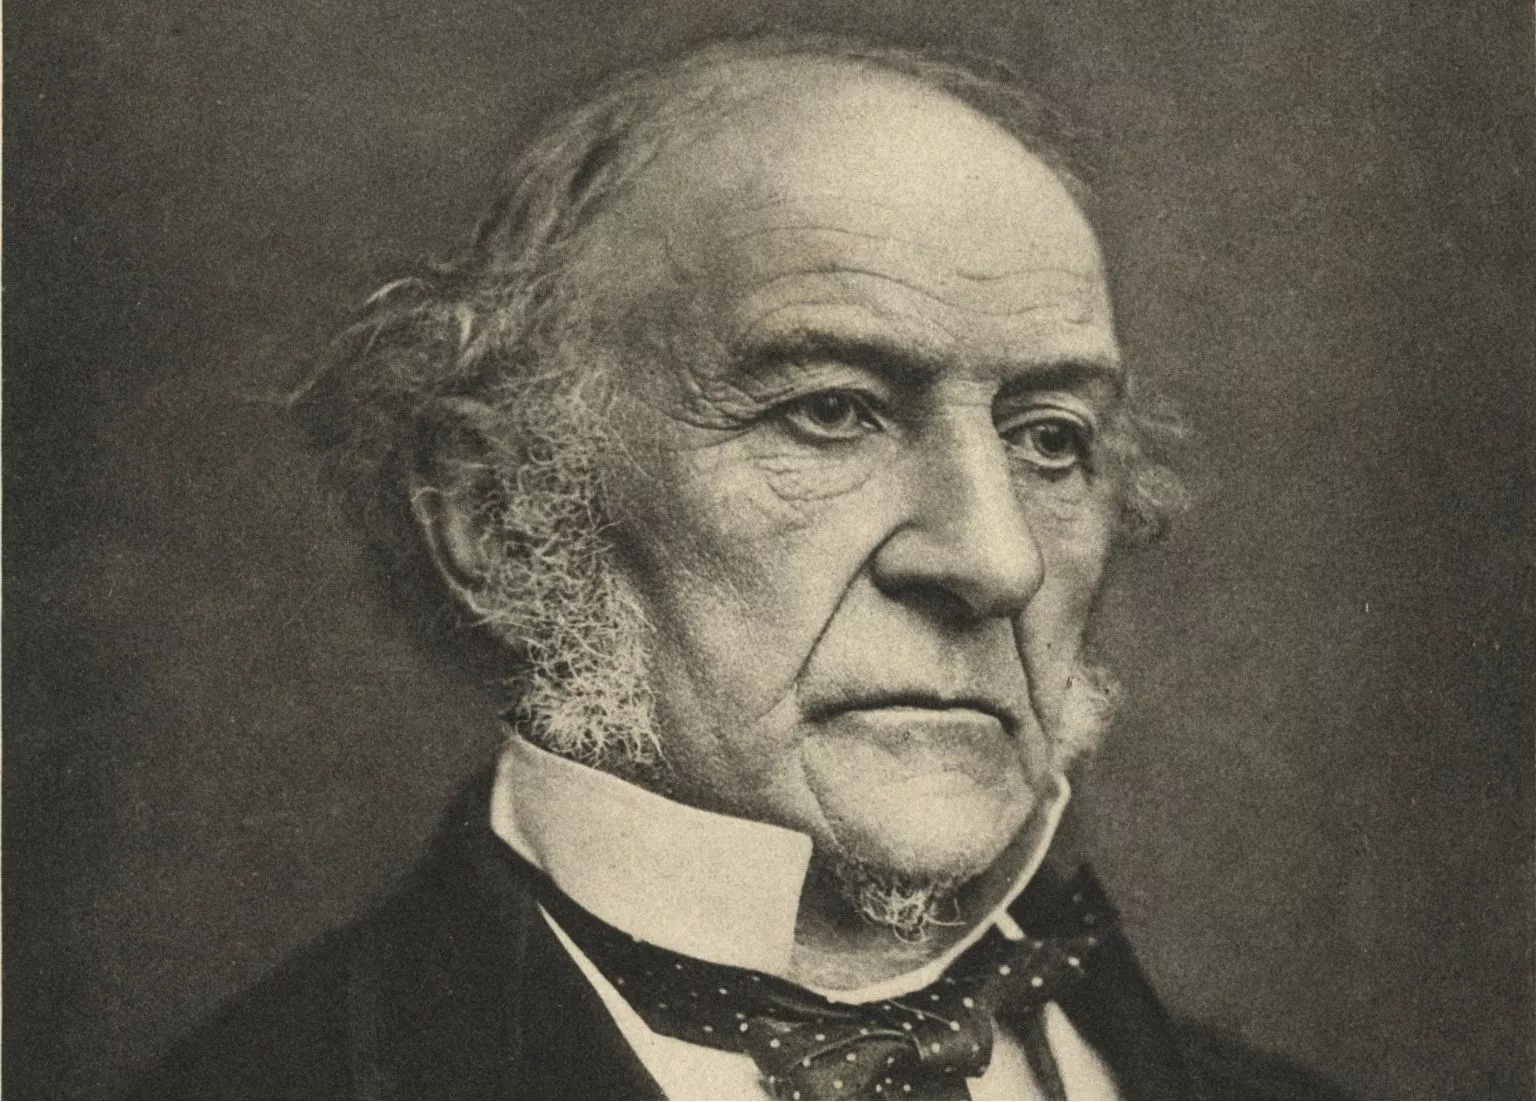 Sir William Gladstone va protagonitzar la primera campanya política moderna